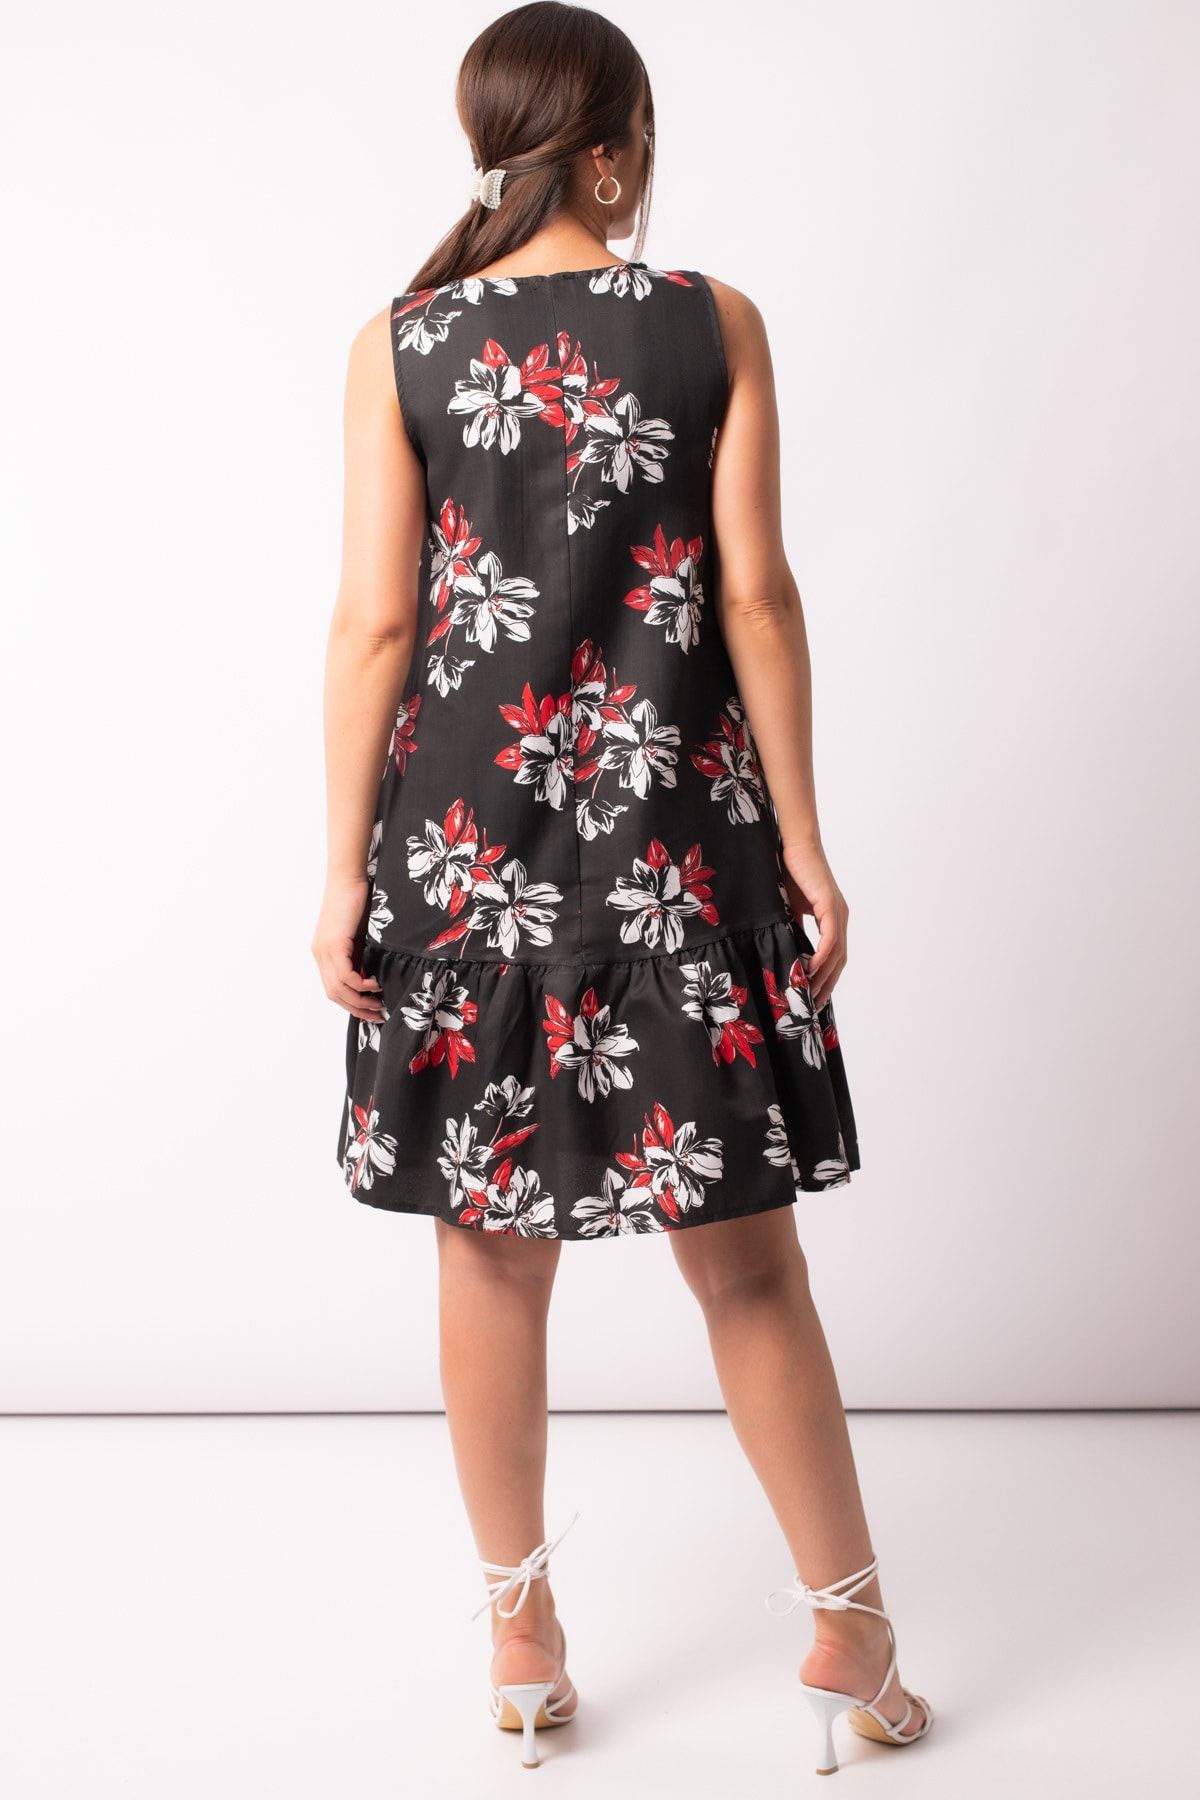 armonika Schwarzes ärmelloses Damenkleid mit großem Blumenmuster  ARM-22Y001014 - Trendyol